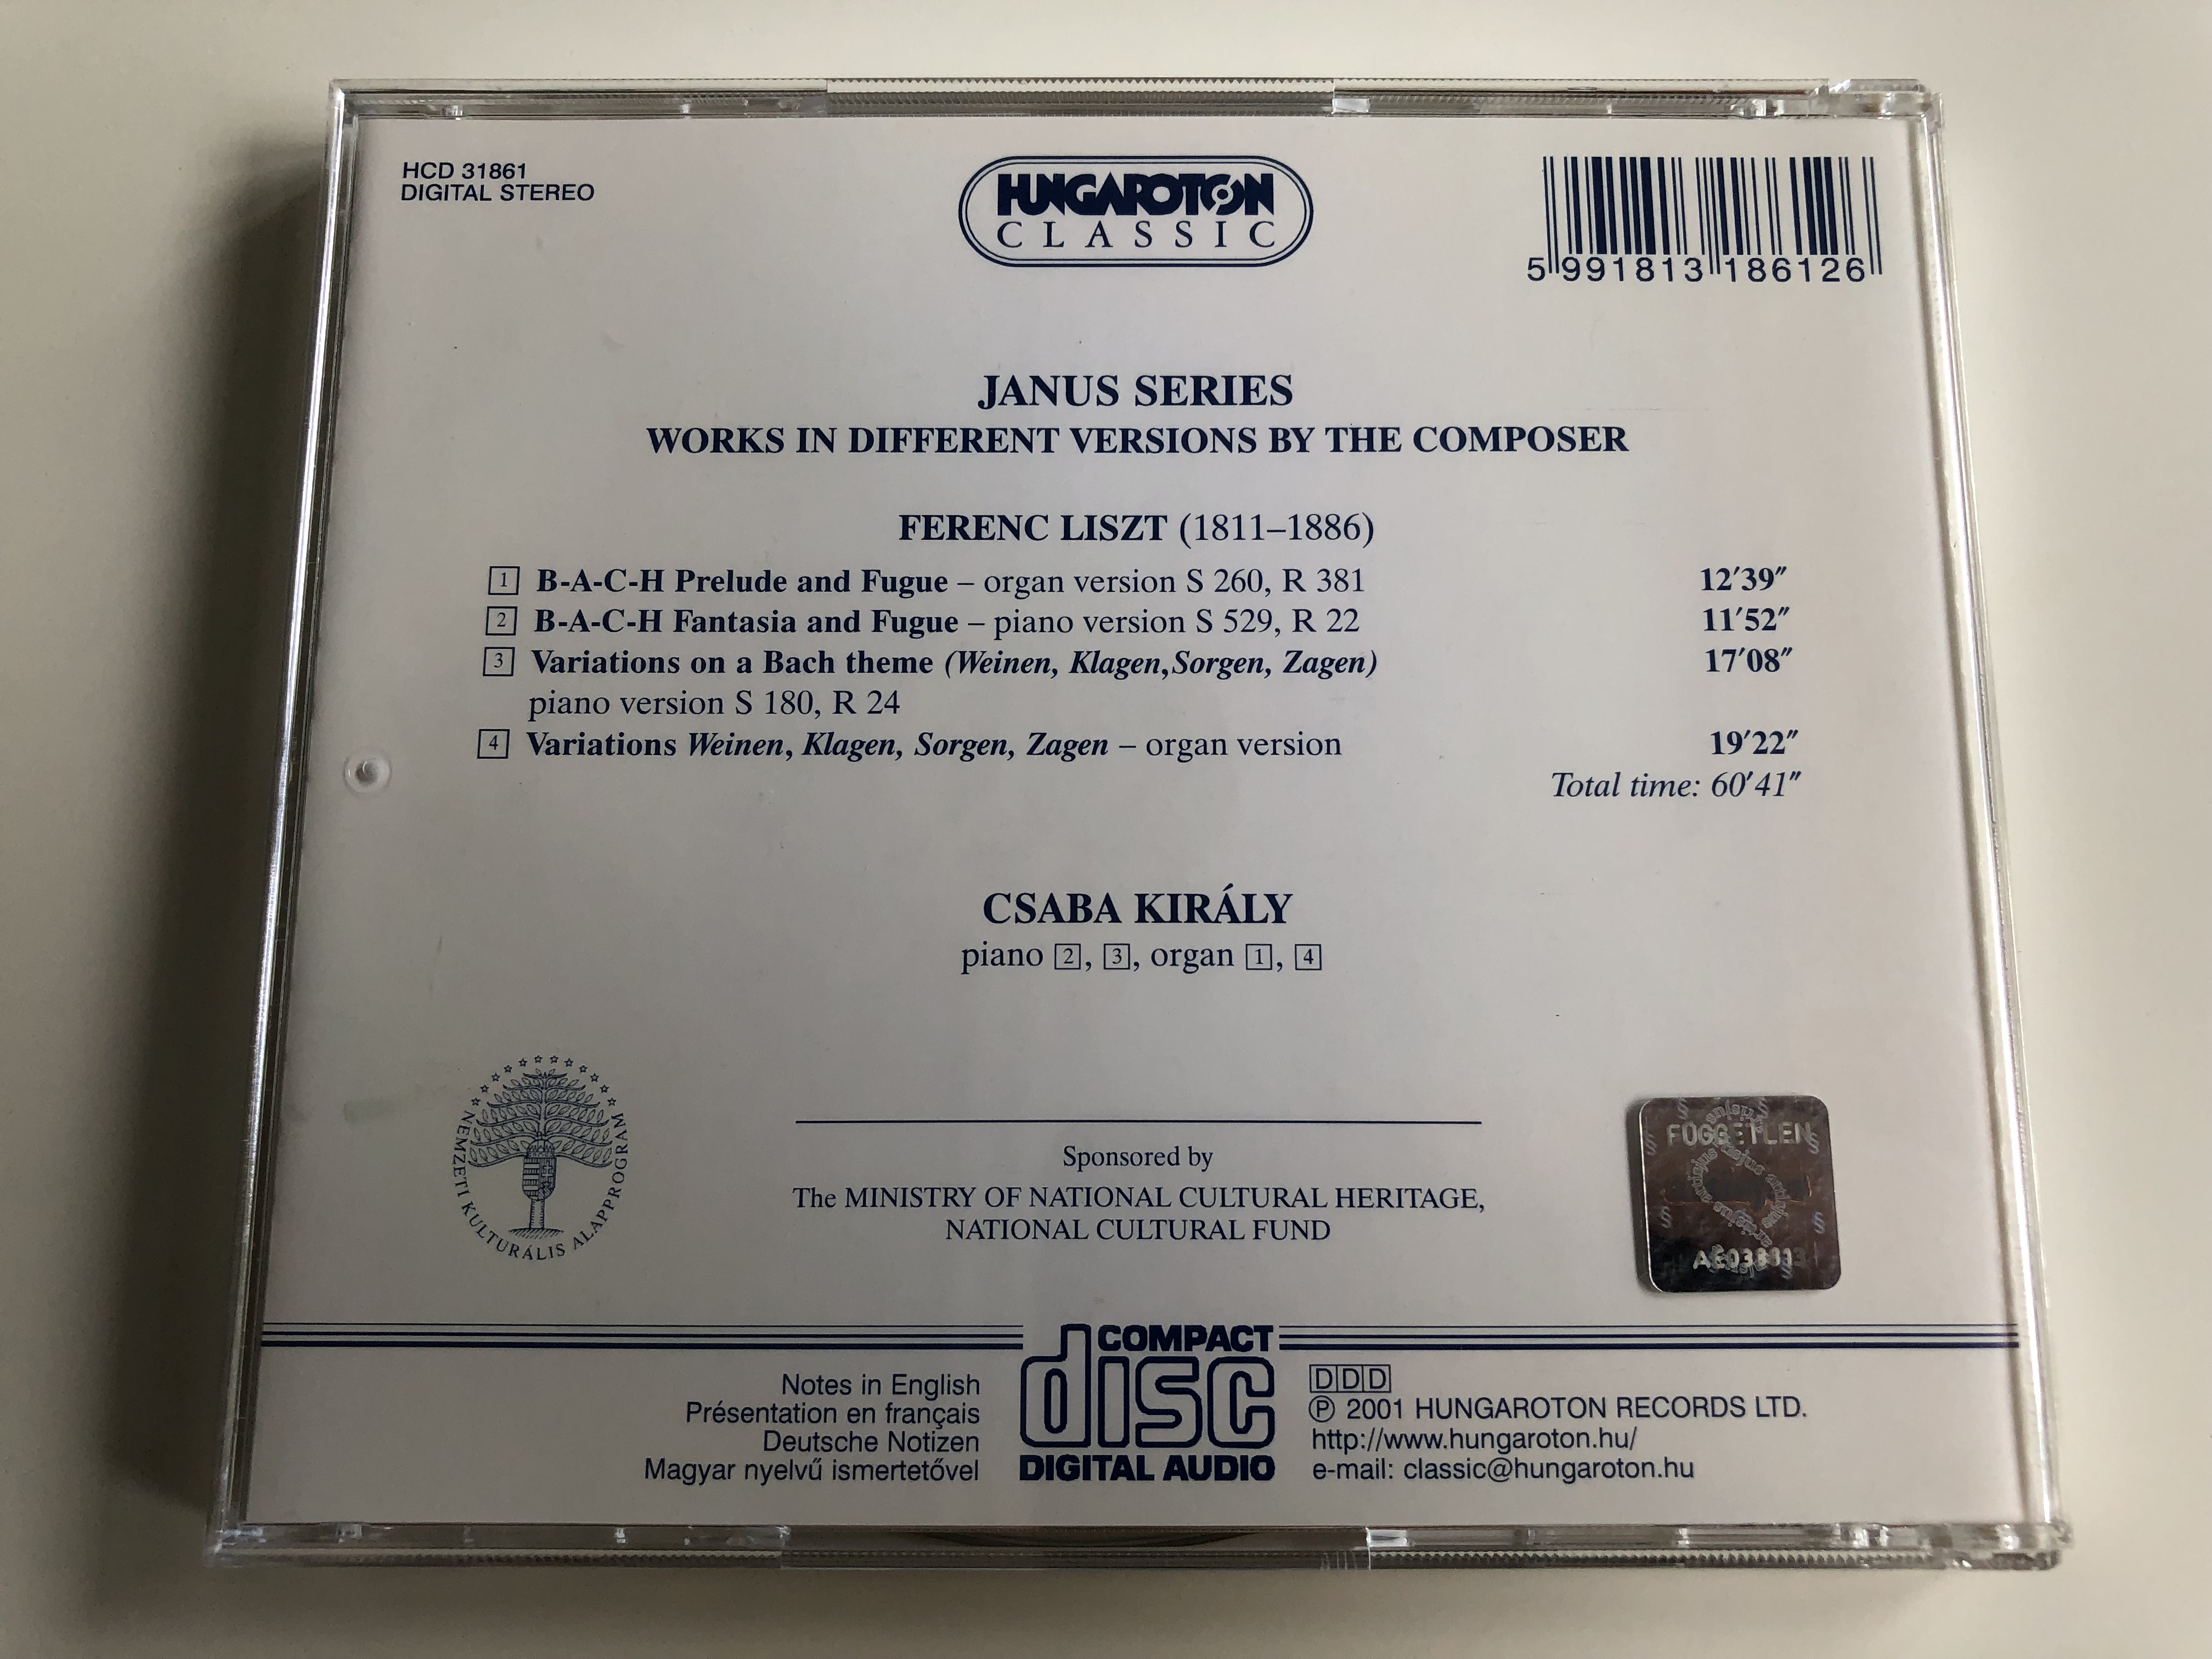 liszt-bach-prelude-fugue-fantasia-fugue-weinen-klagen-sorgen-zagen-variations-organ-piano-versions-csaba-kir-ly-organ-piano-hungaroton-janus-collection-hcd-31861-audio-cd-2001-7-.jpg